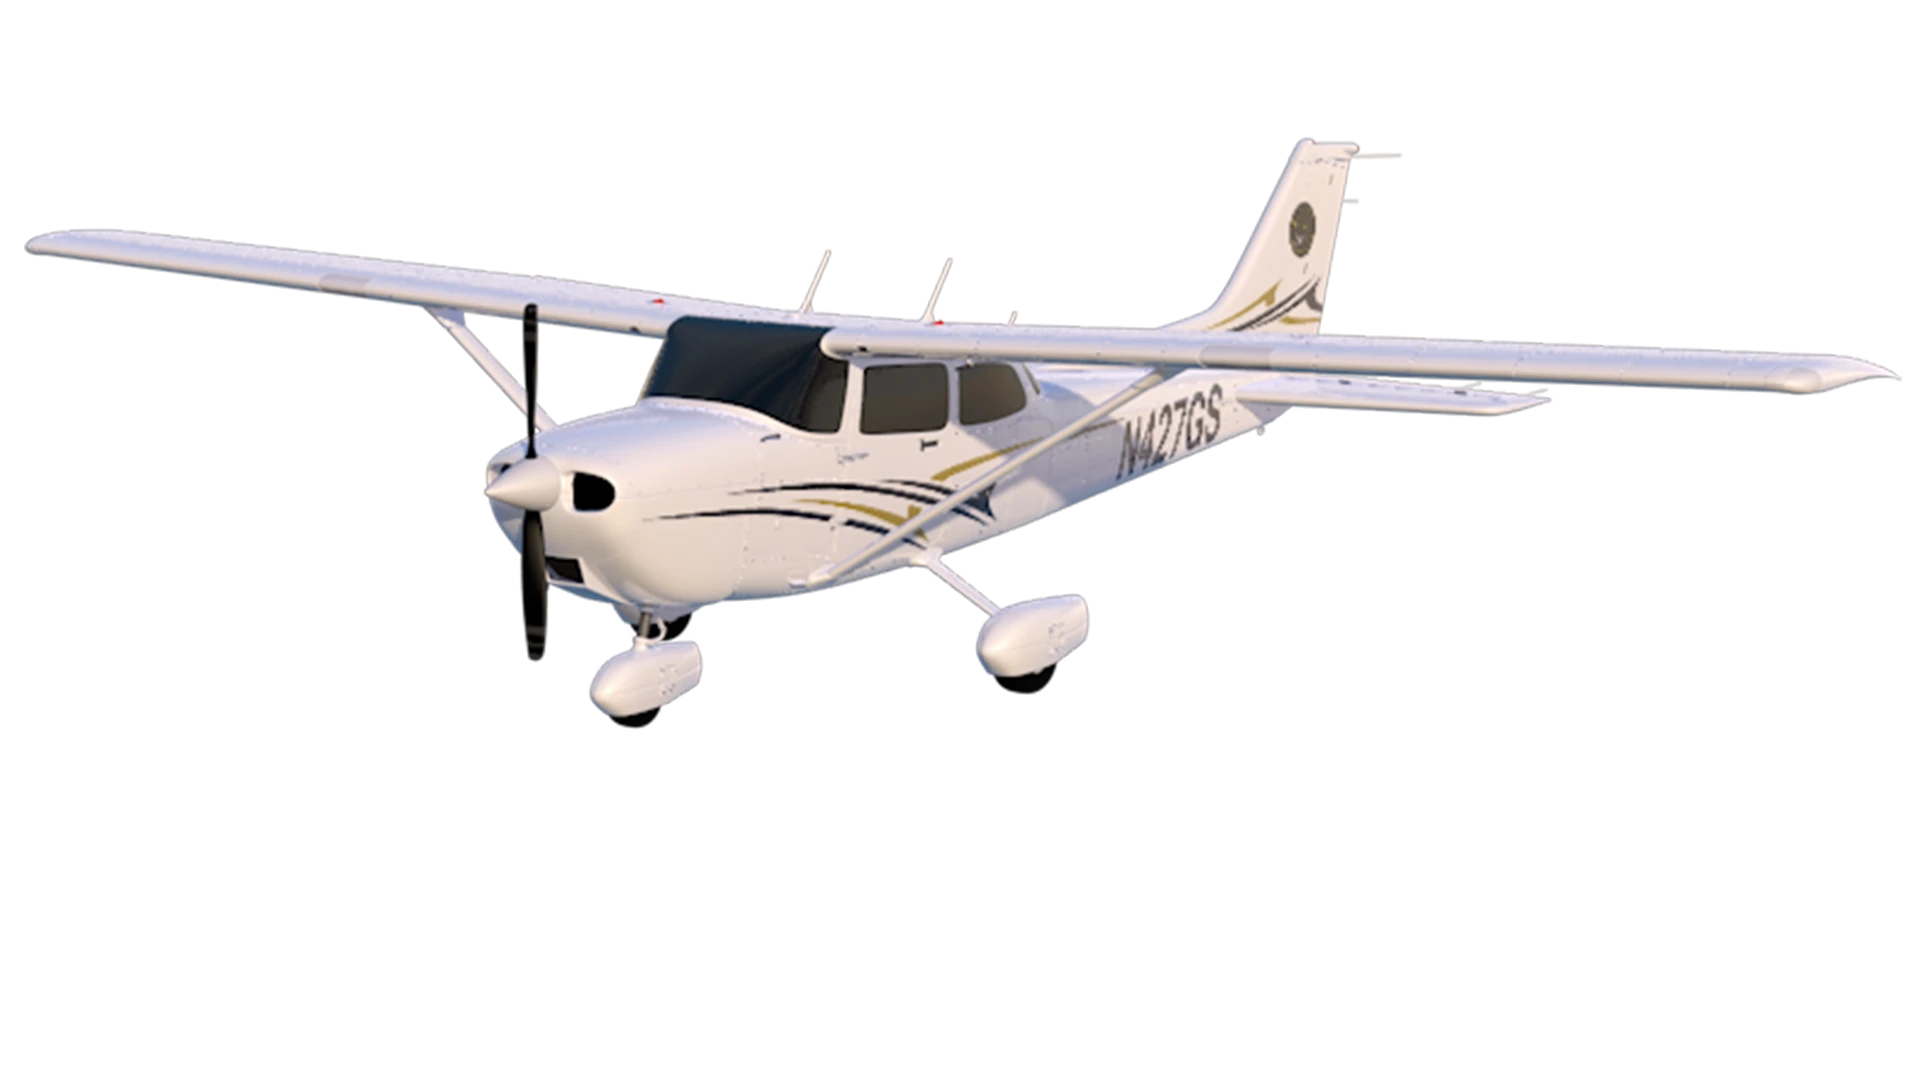 Cessna 172 representing the Gold Seal Private Pilot Ground School.